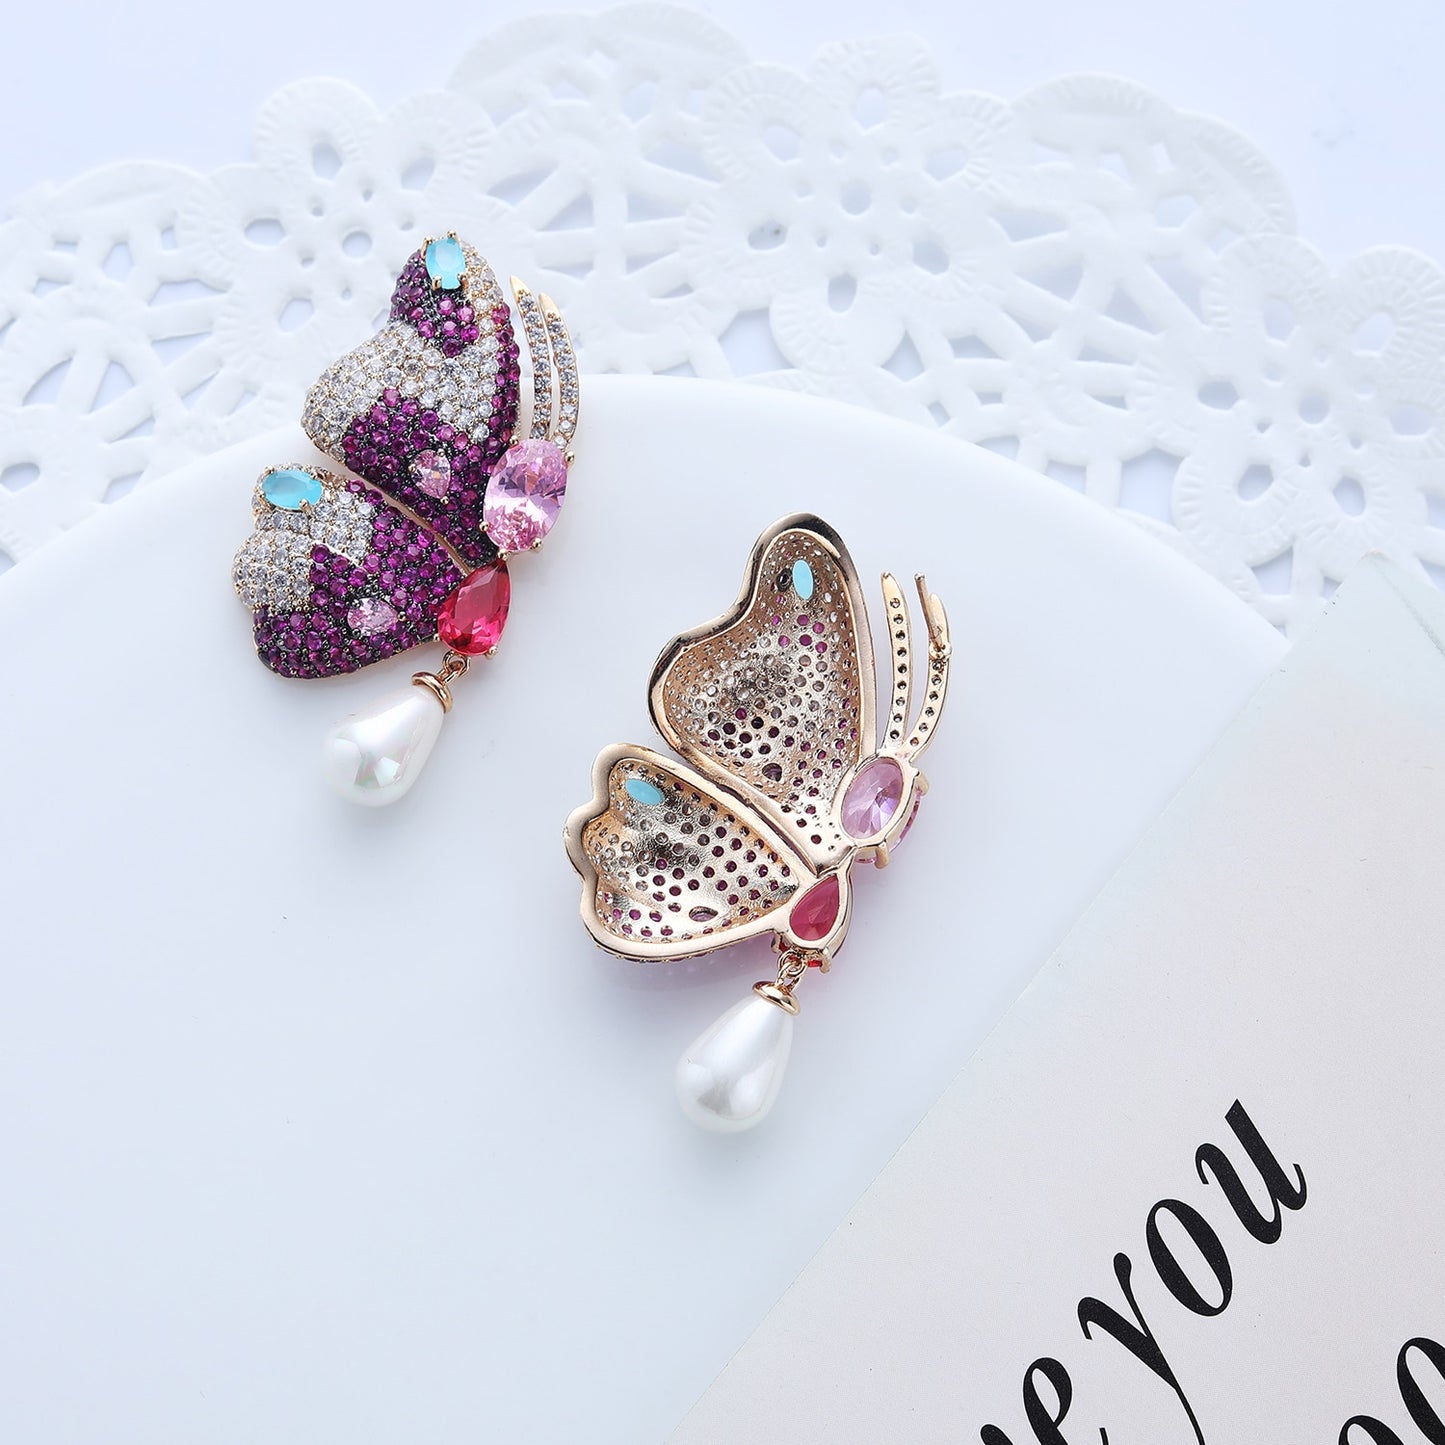 Pearl Cubic Zircon Butterfly Earrings for Weddings Parties Formal Events